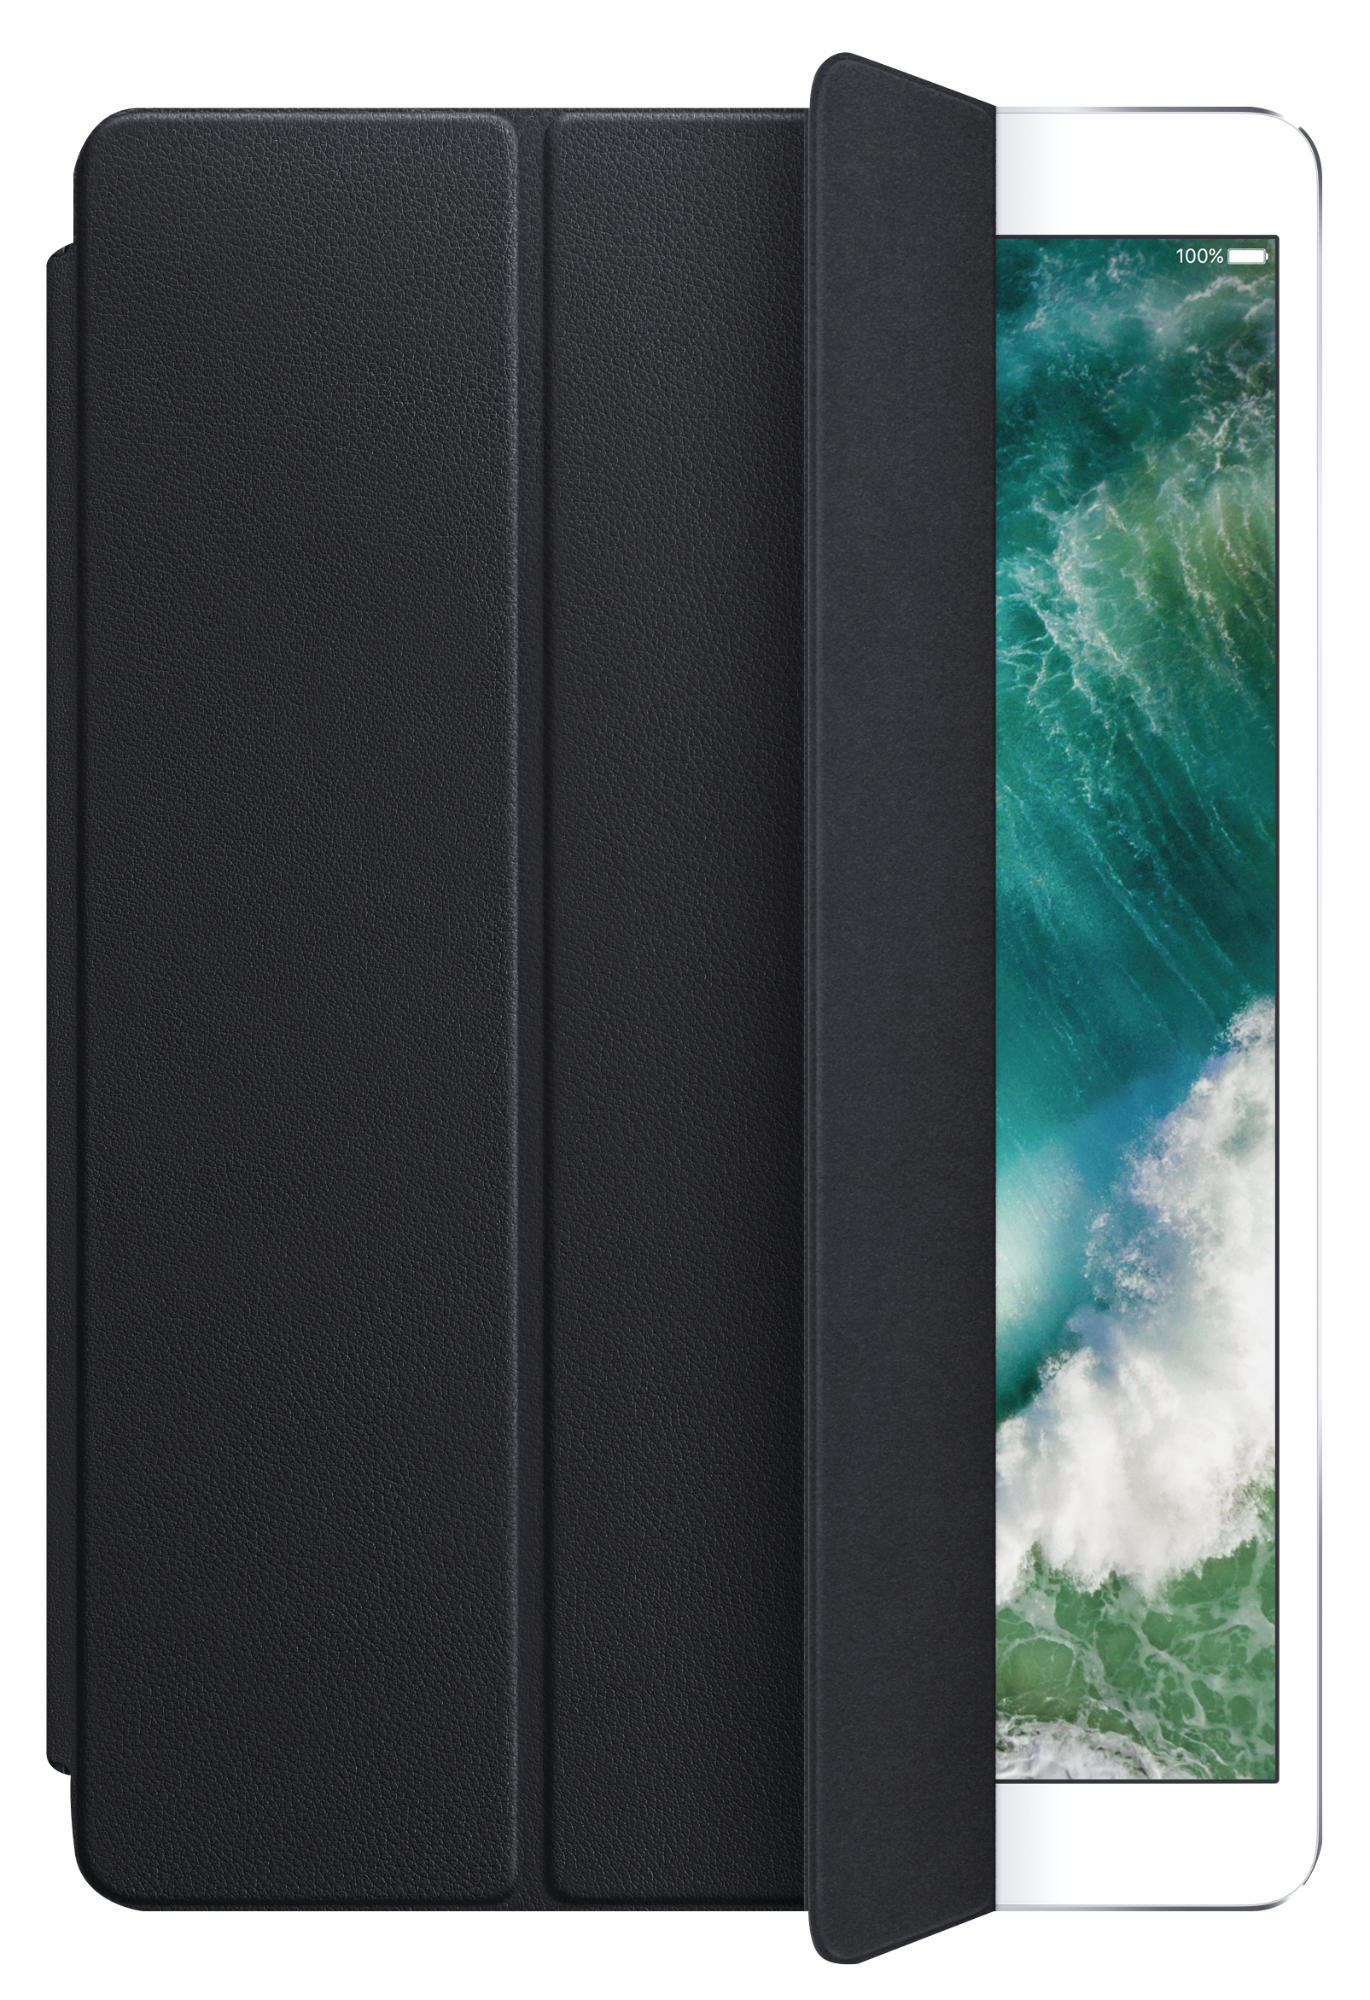 Funda Leather Smart cover para ipad pro de 105 negro tablet apple mpud2zma 10.5 gris 267 cm 2667 10 5